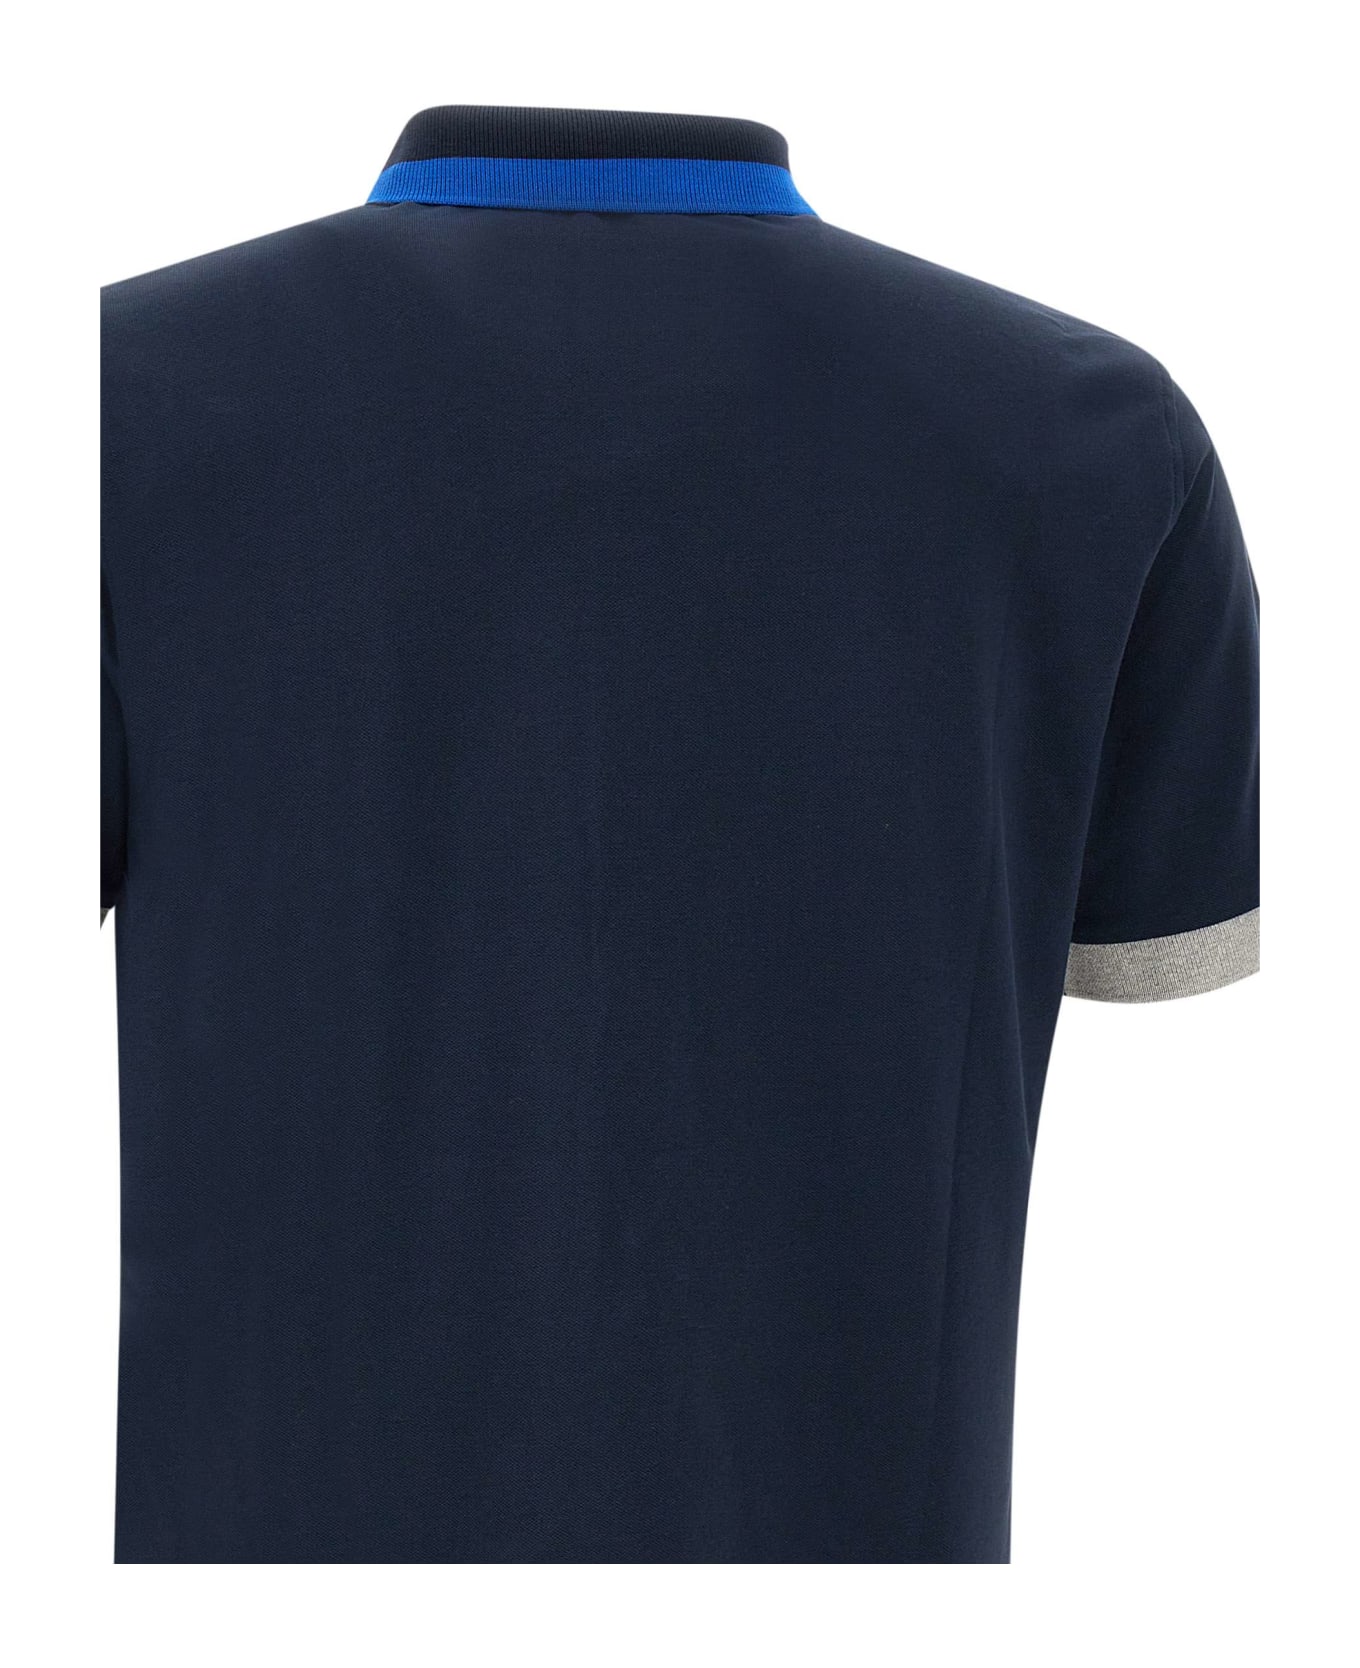 Sun 68 "big Stripe" Cotton Polo Shirt - BLUE ポロシャツ